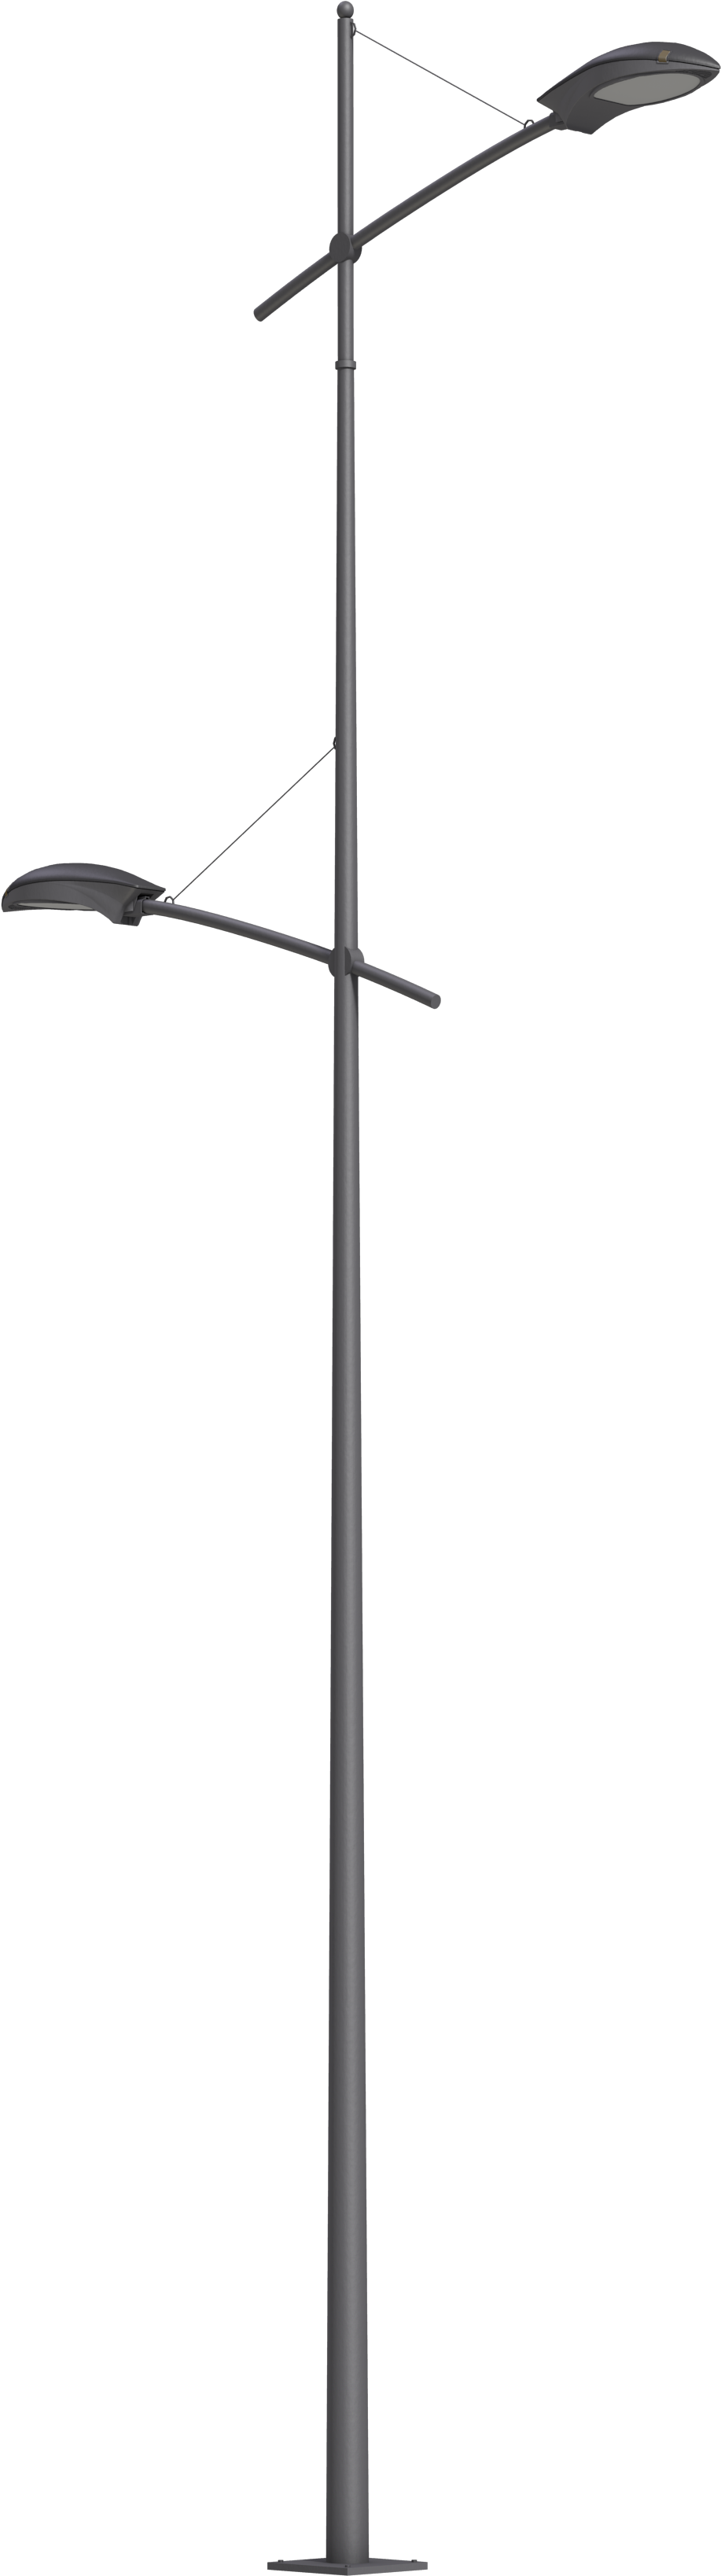 A Light Pole With A Street Light